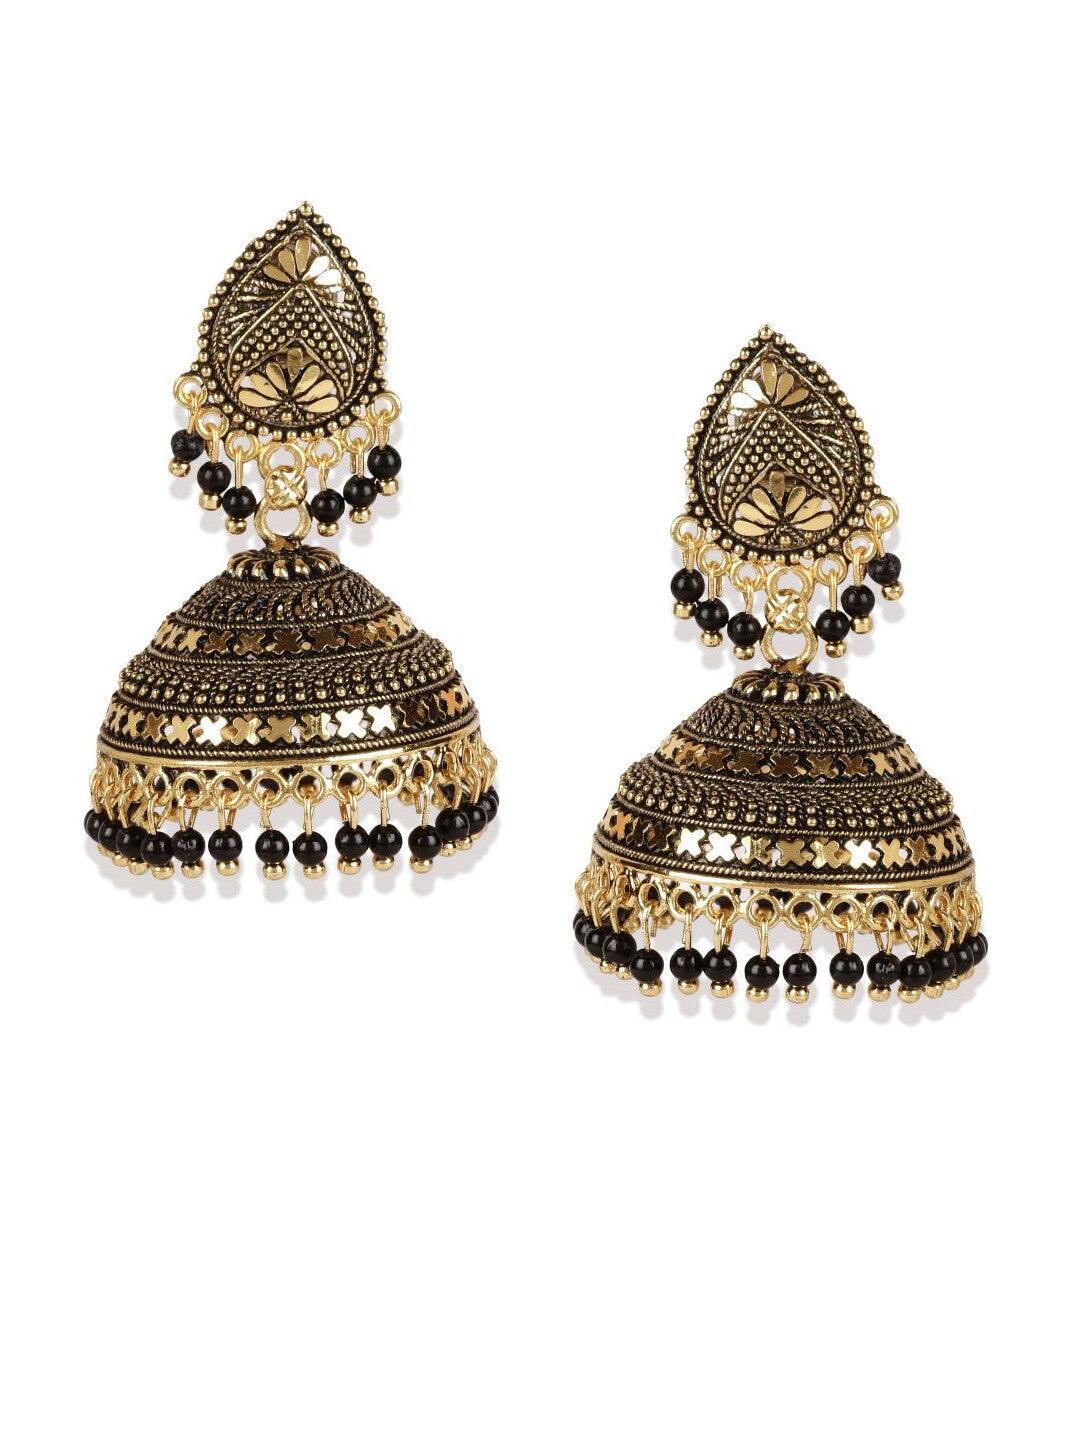 Diamond Shape Embellished Black Pearls Dome Shape Jhumka Earrings For Women and Girls - Libasaa